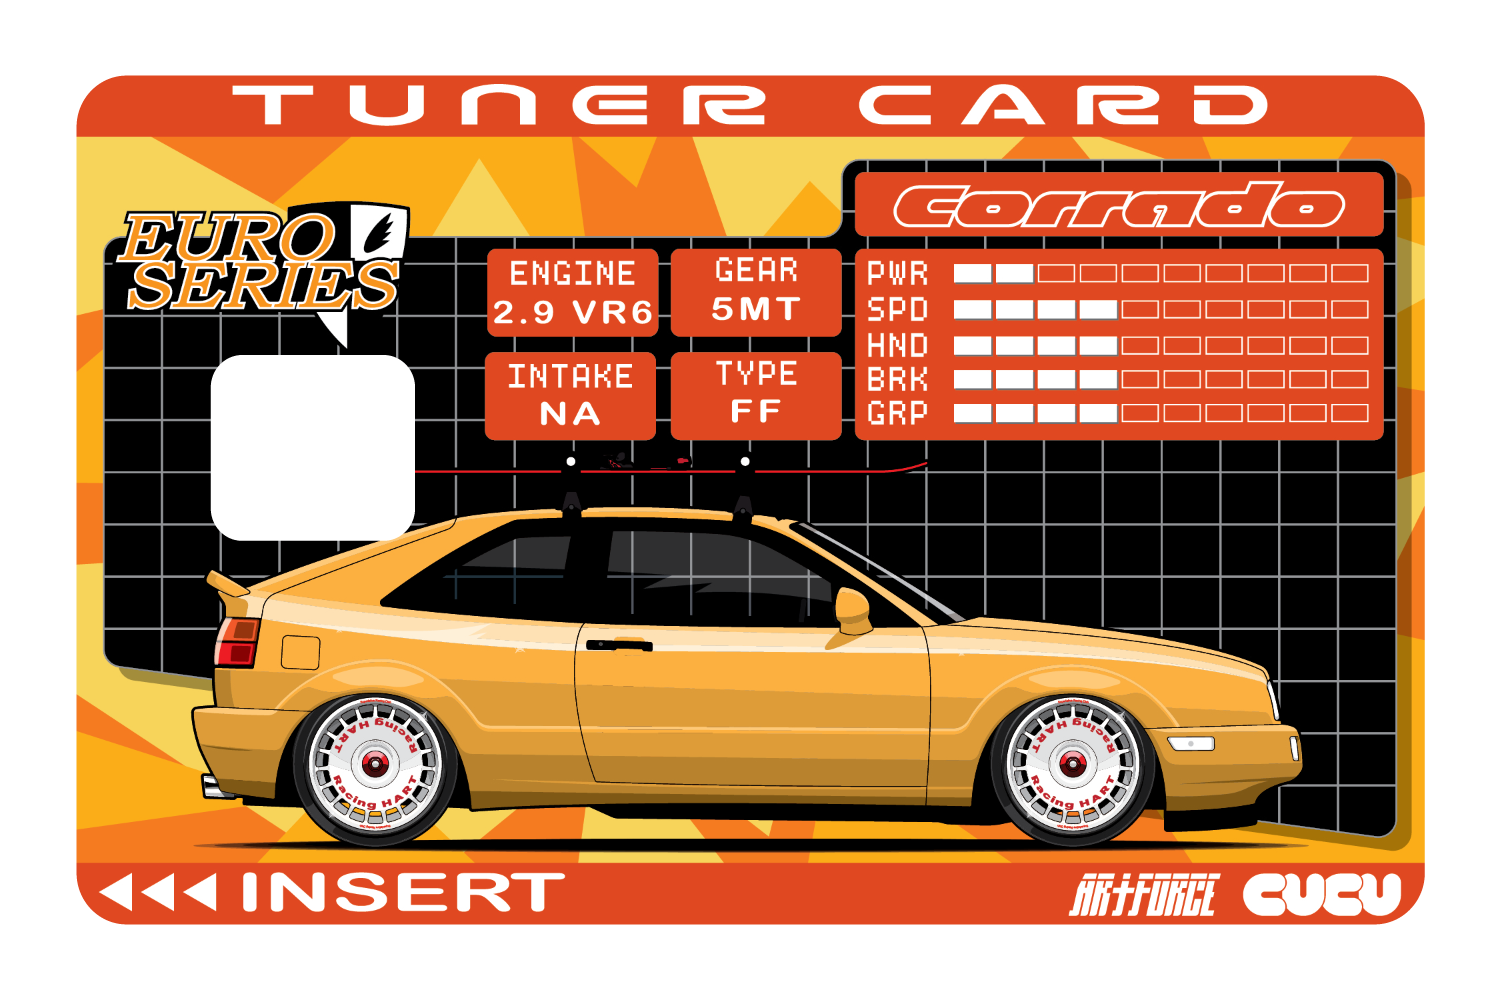 Corrado Tuner Card